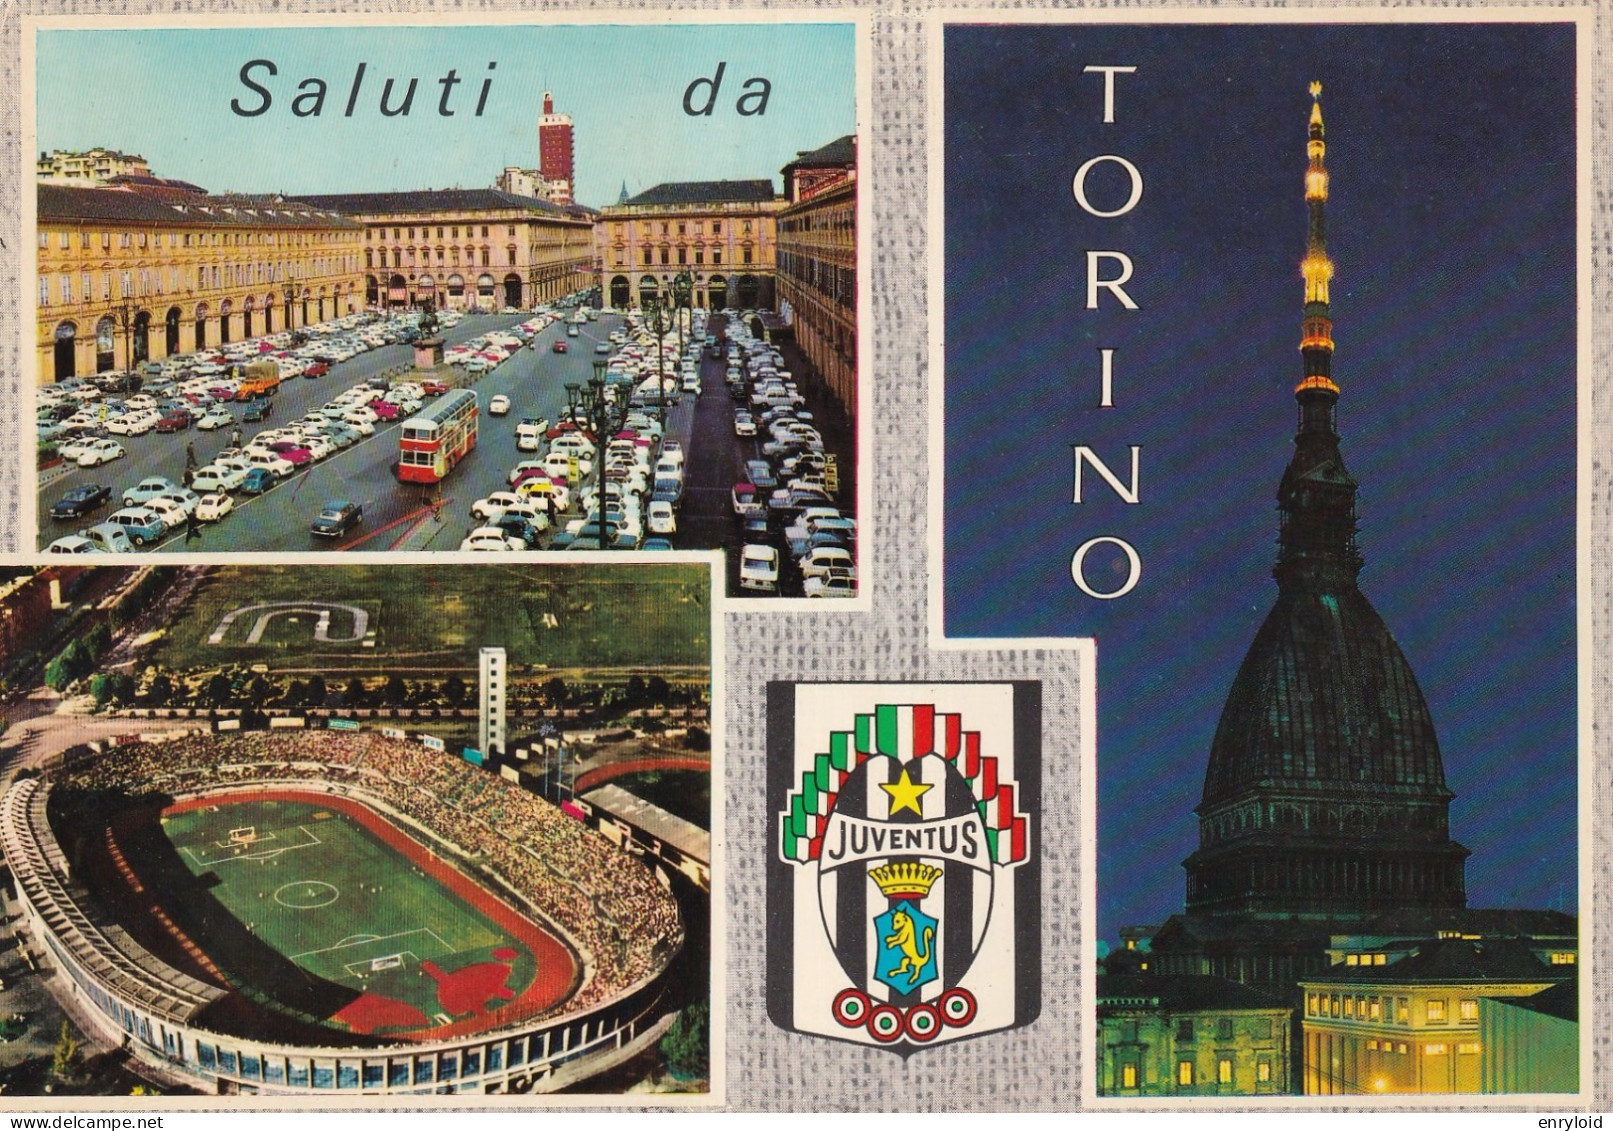 Torino Piazza San Carlo Stadio Comunale Mole Antonelliana - Andere Monumente & Gebäude